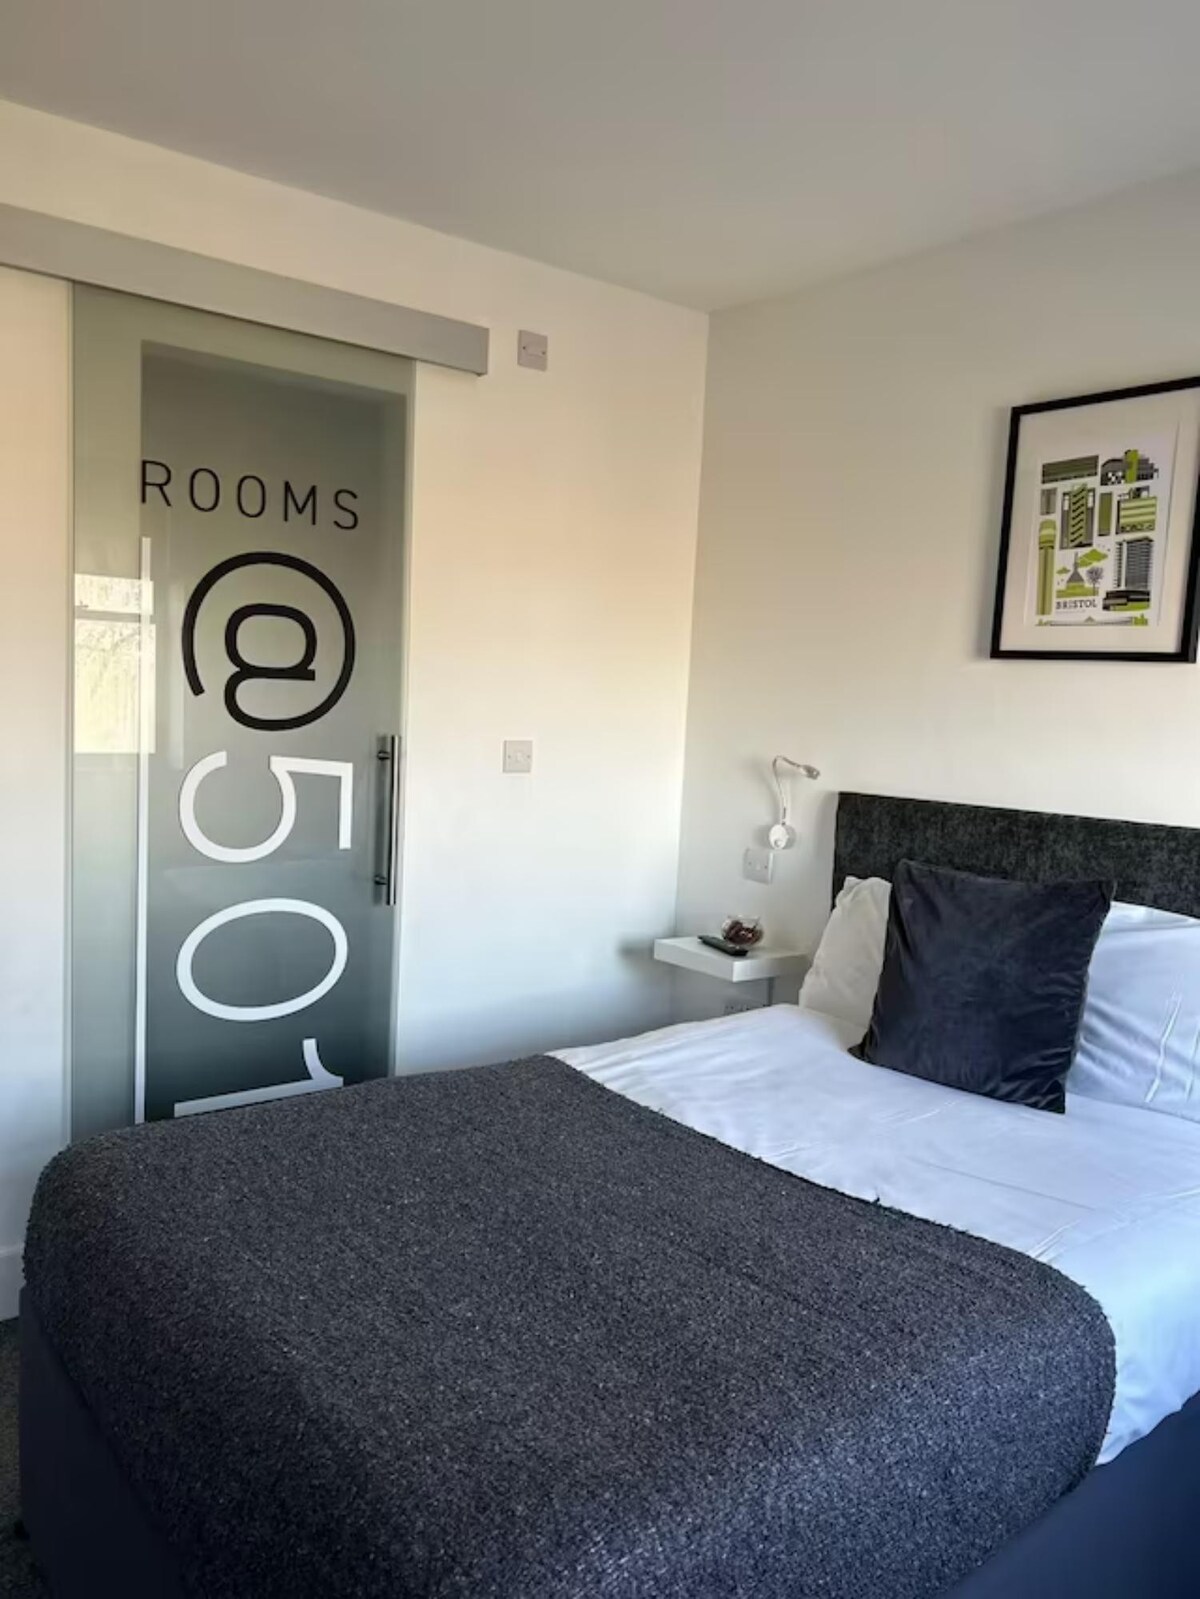 Rooms 501 Standard Single Room